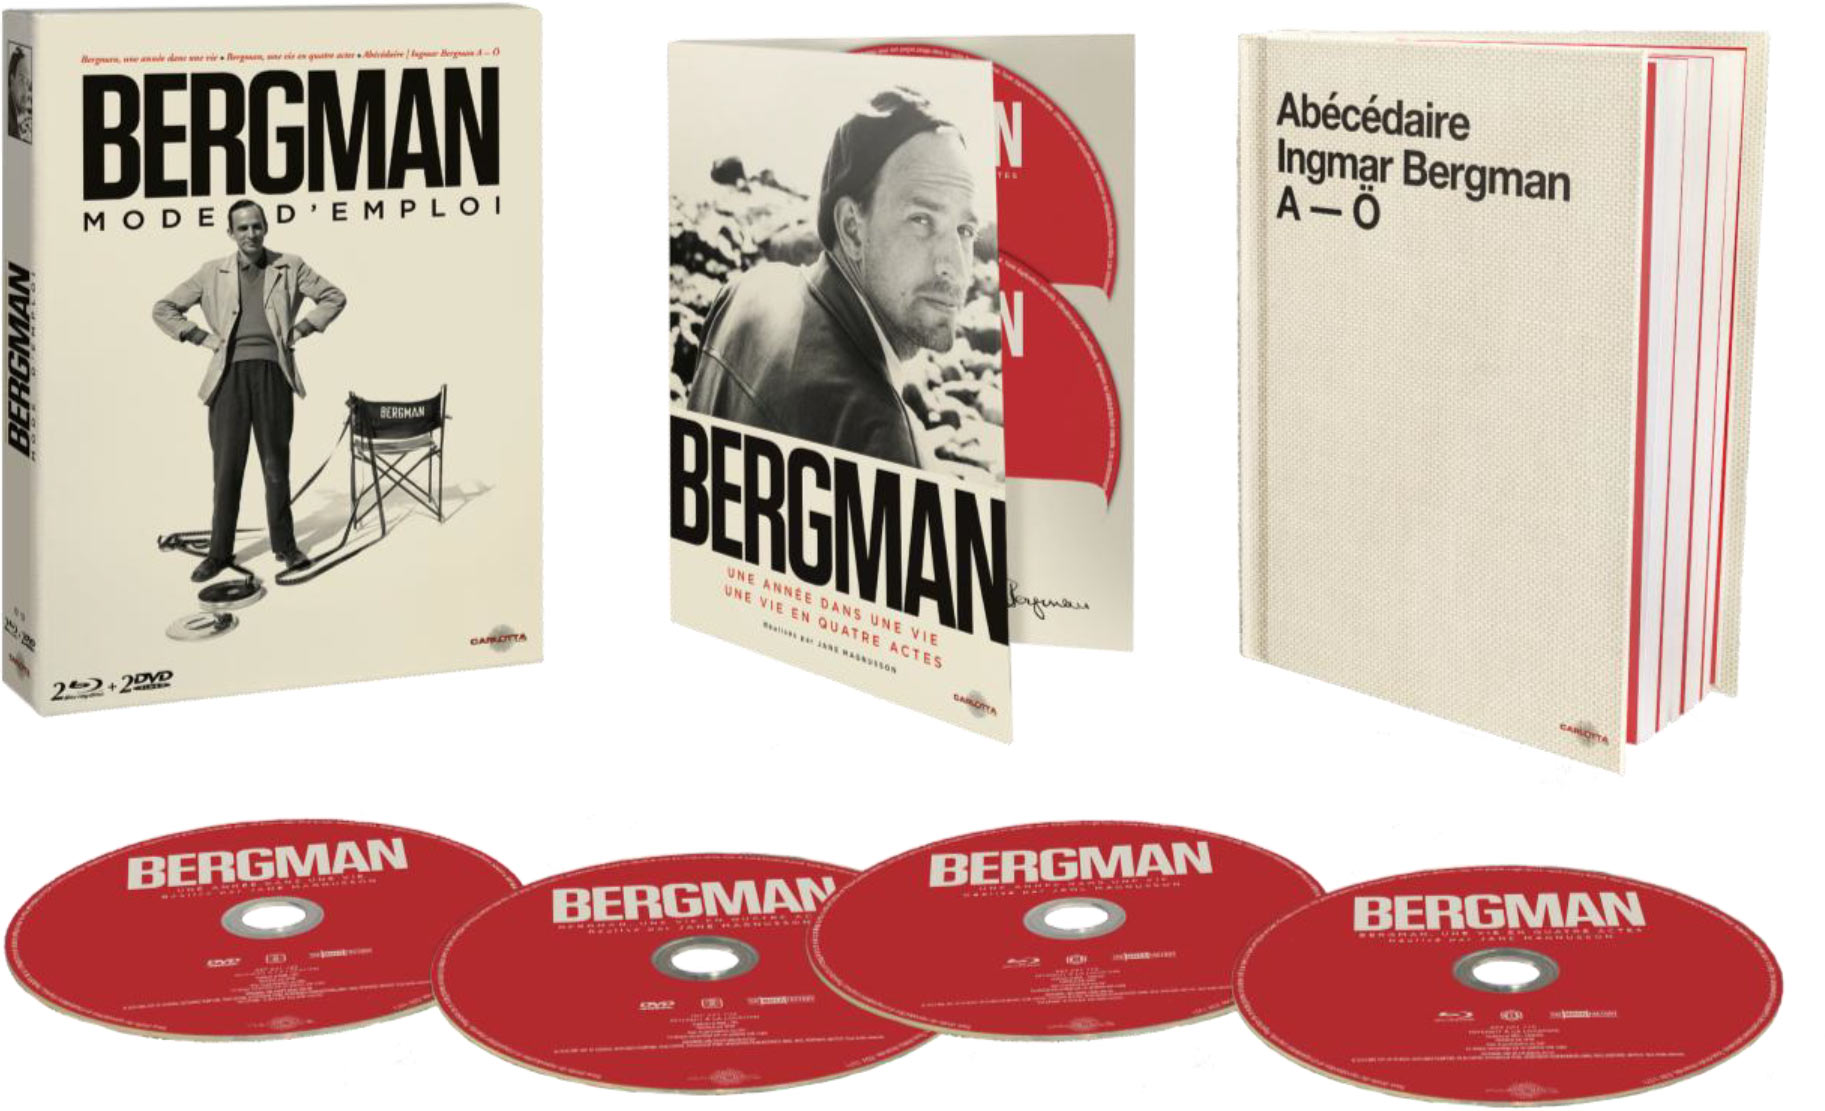 Bergman, mode d'emploi - Blu-ray + DVD + Livre